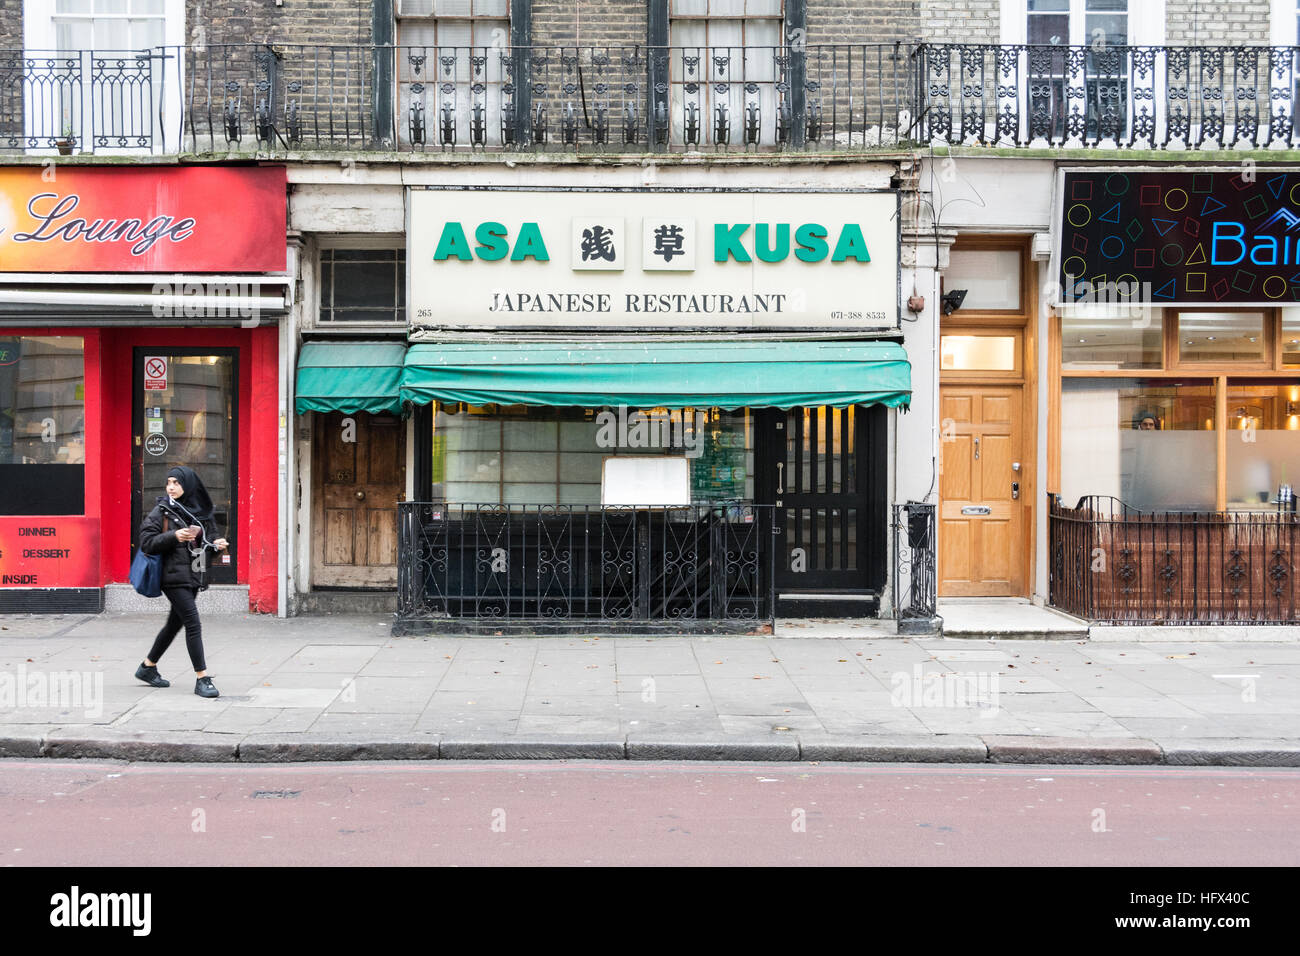 Asu Kusa Japanese restaurant on Eversholt Street, Camden, London, UK Stock Photo